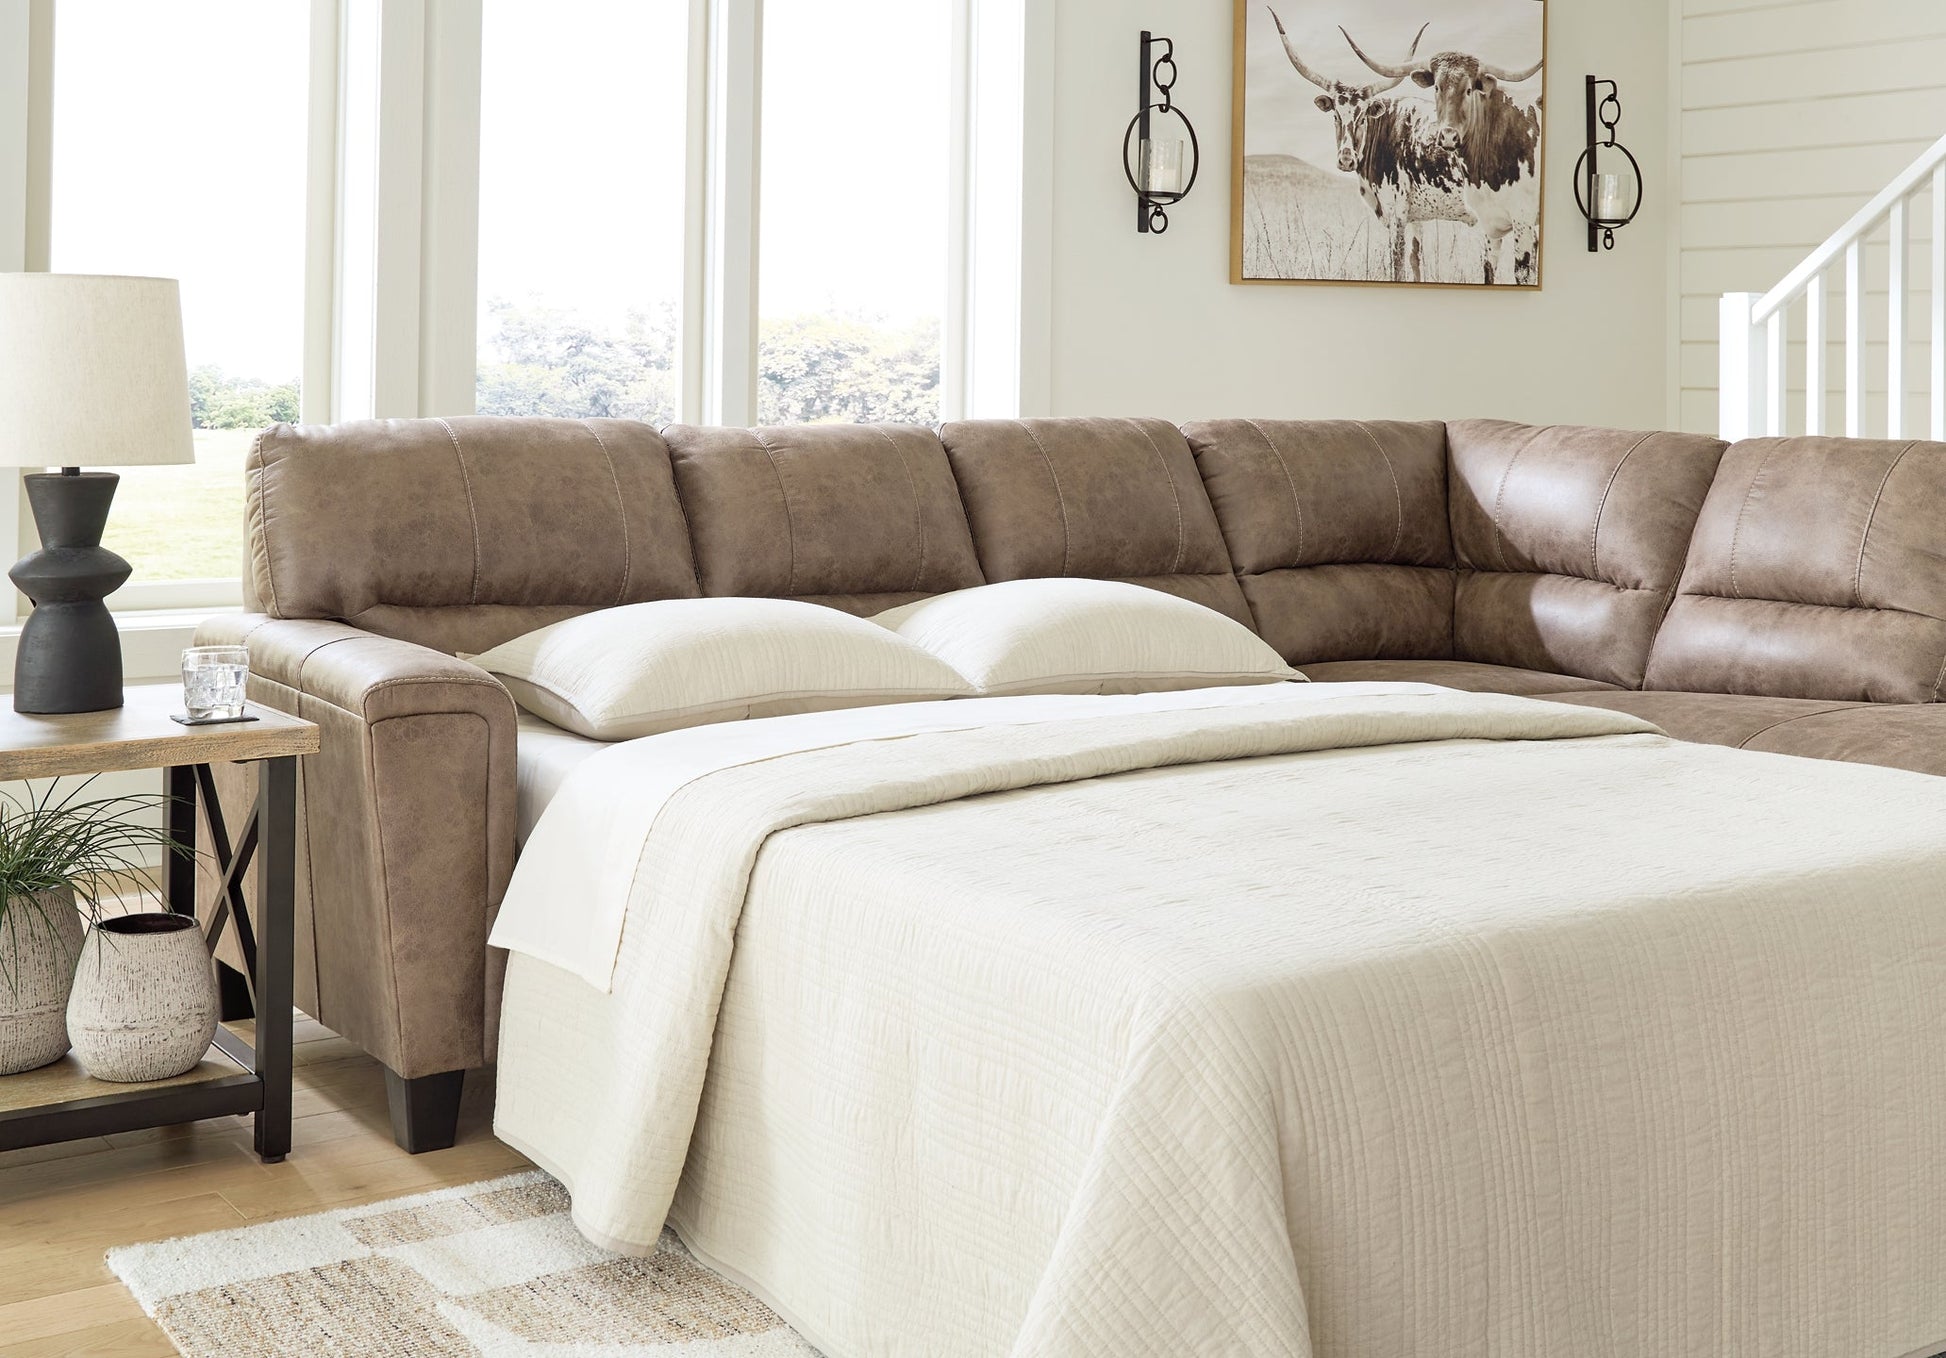 Navi 2-Piece Sectional Sofa Sleeper Chaise at Cloud 9 Mattress & Furniture furniture, home furnishing, home decor